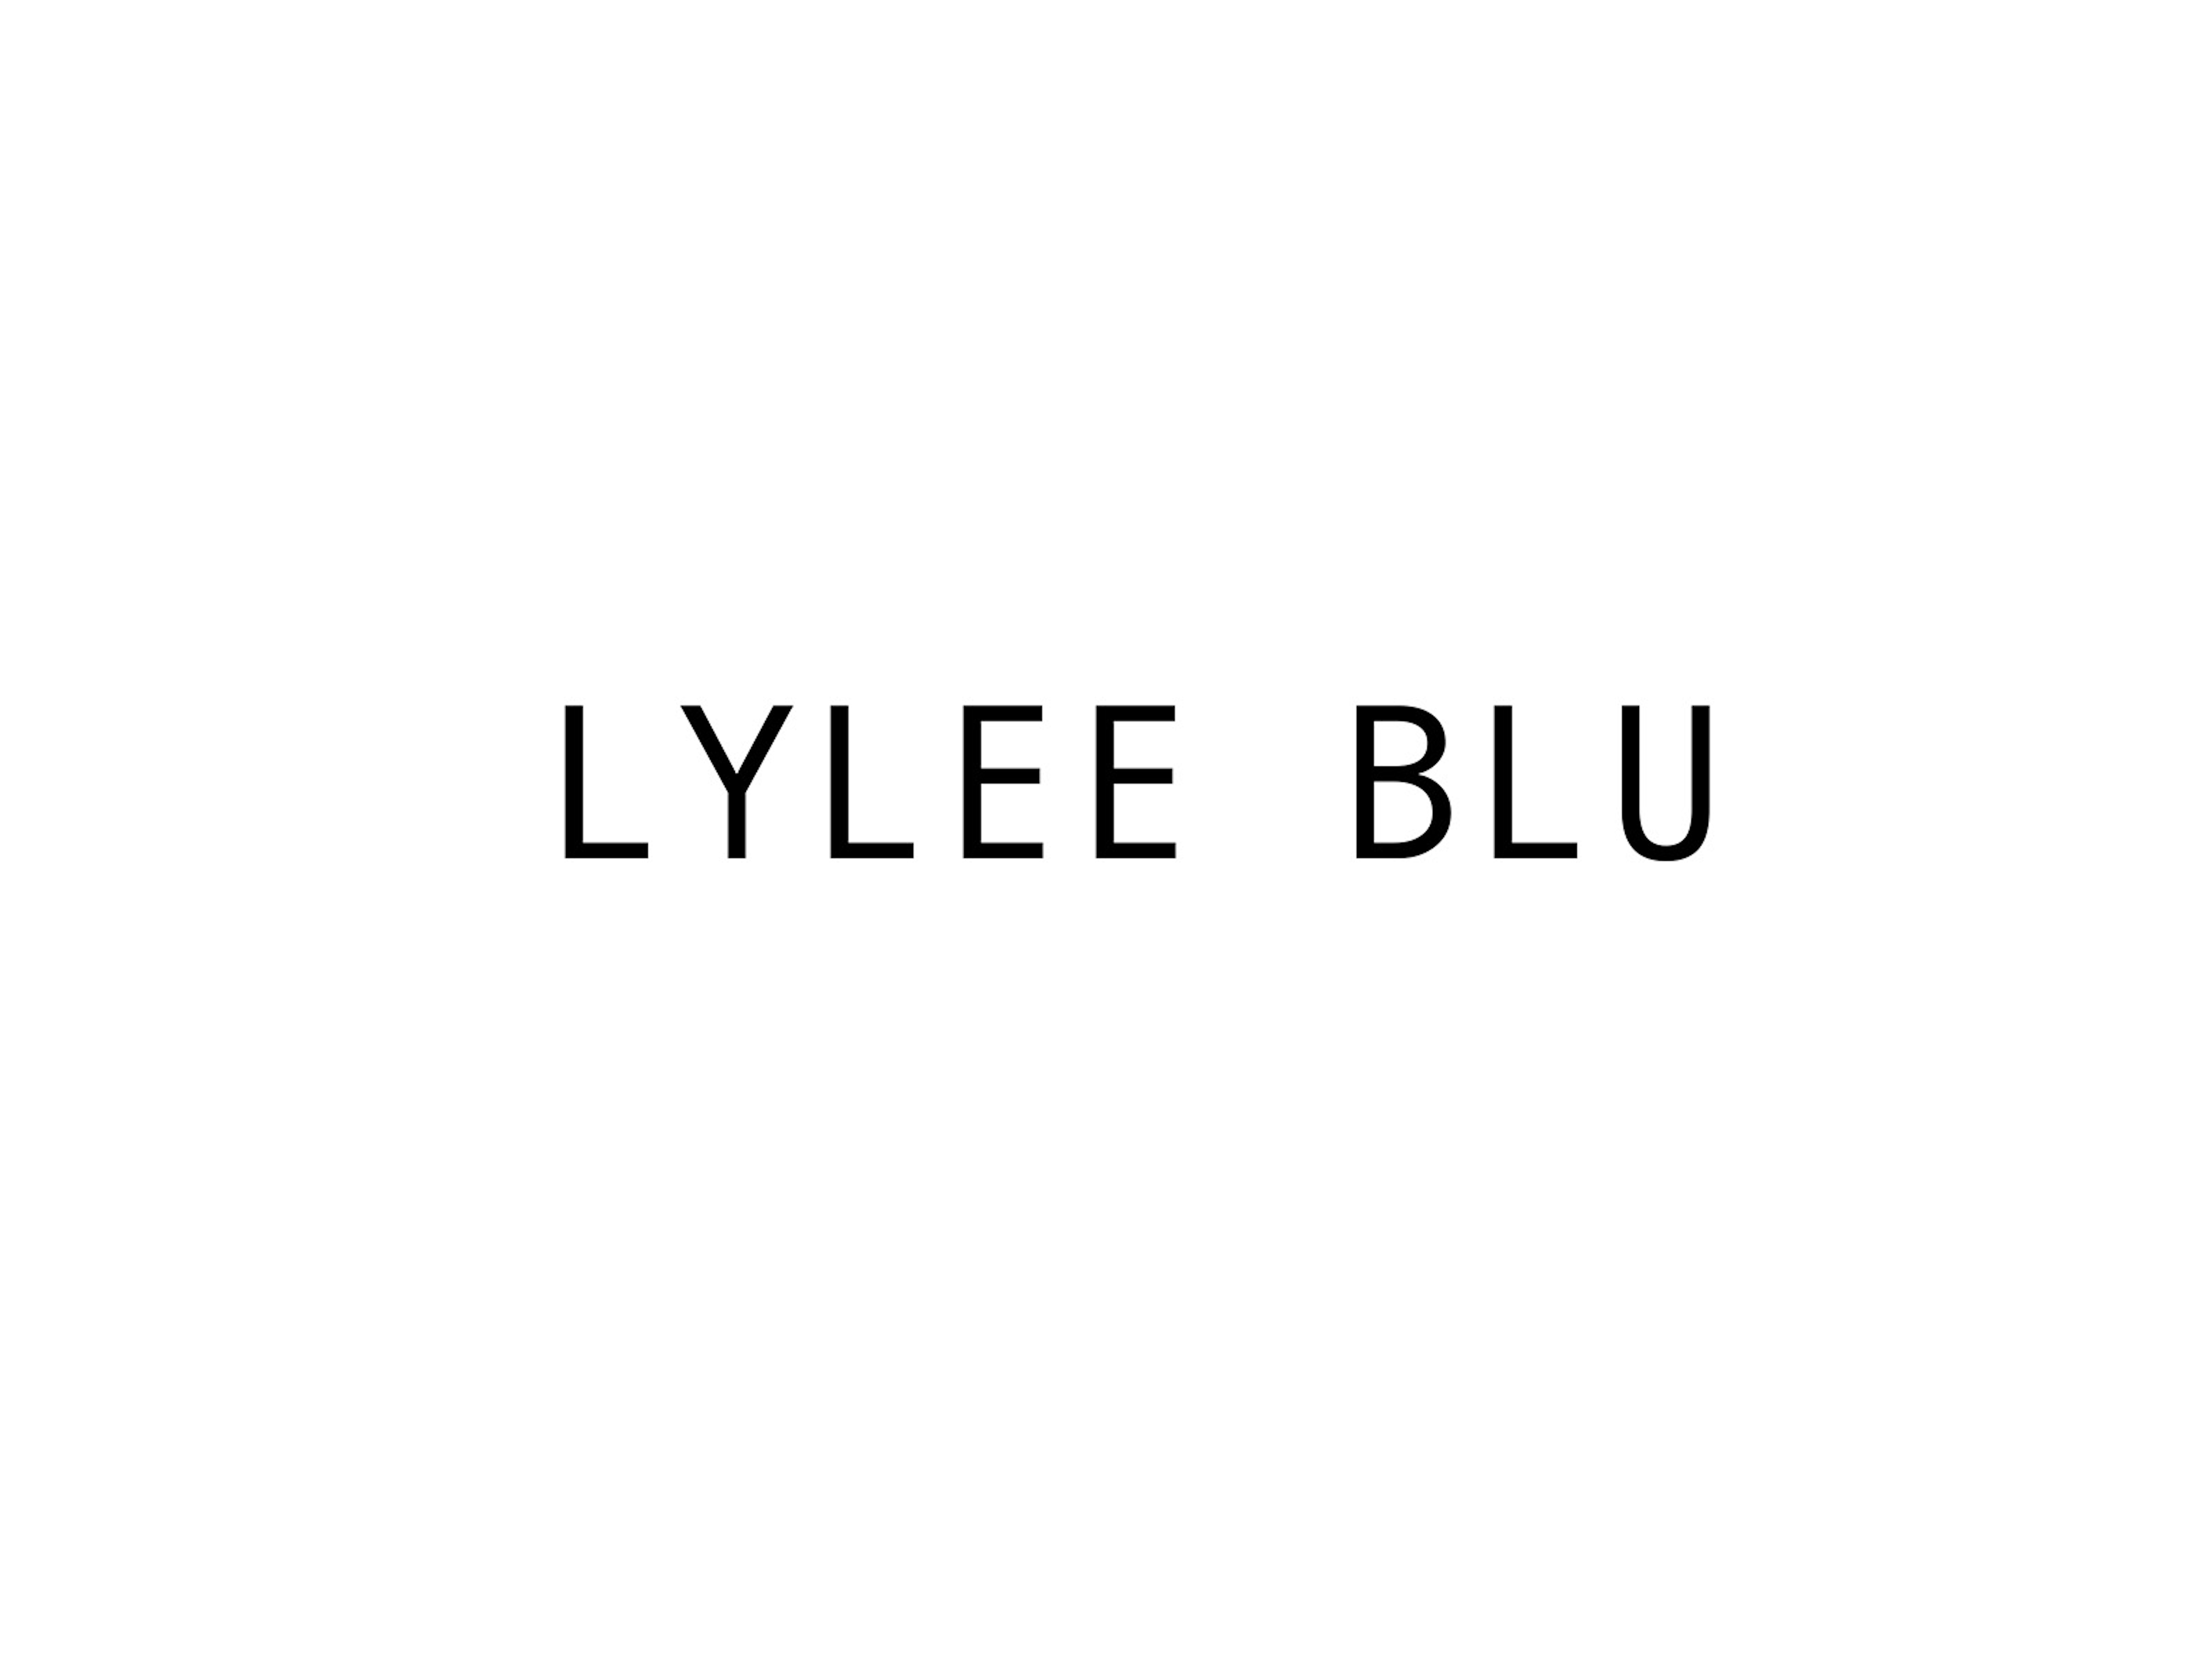 Lylee Blu Diffusion